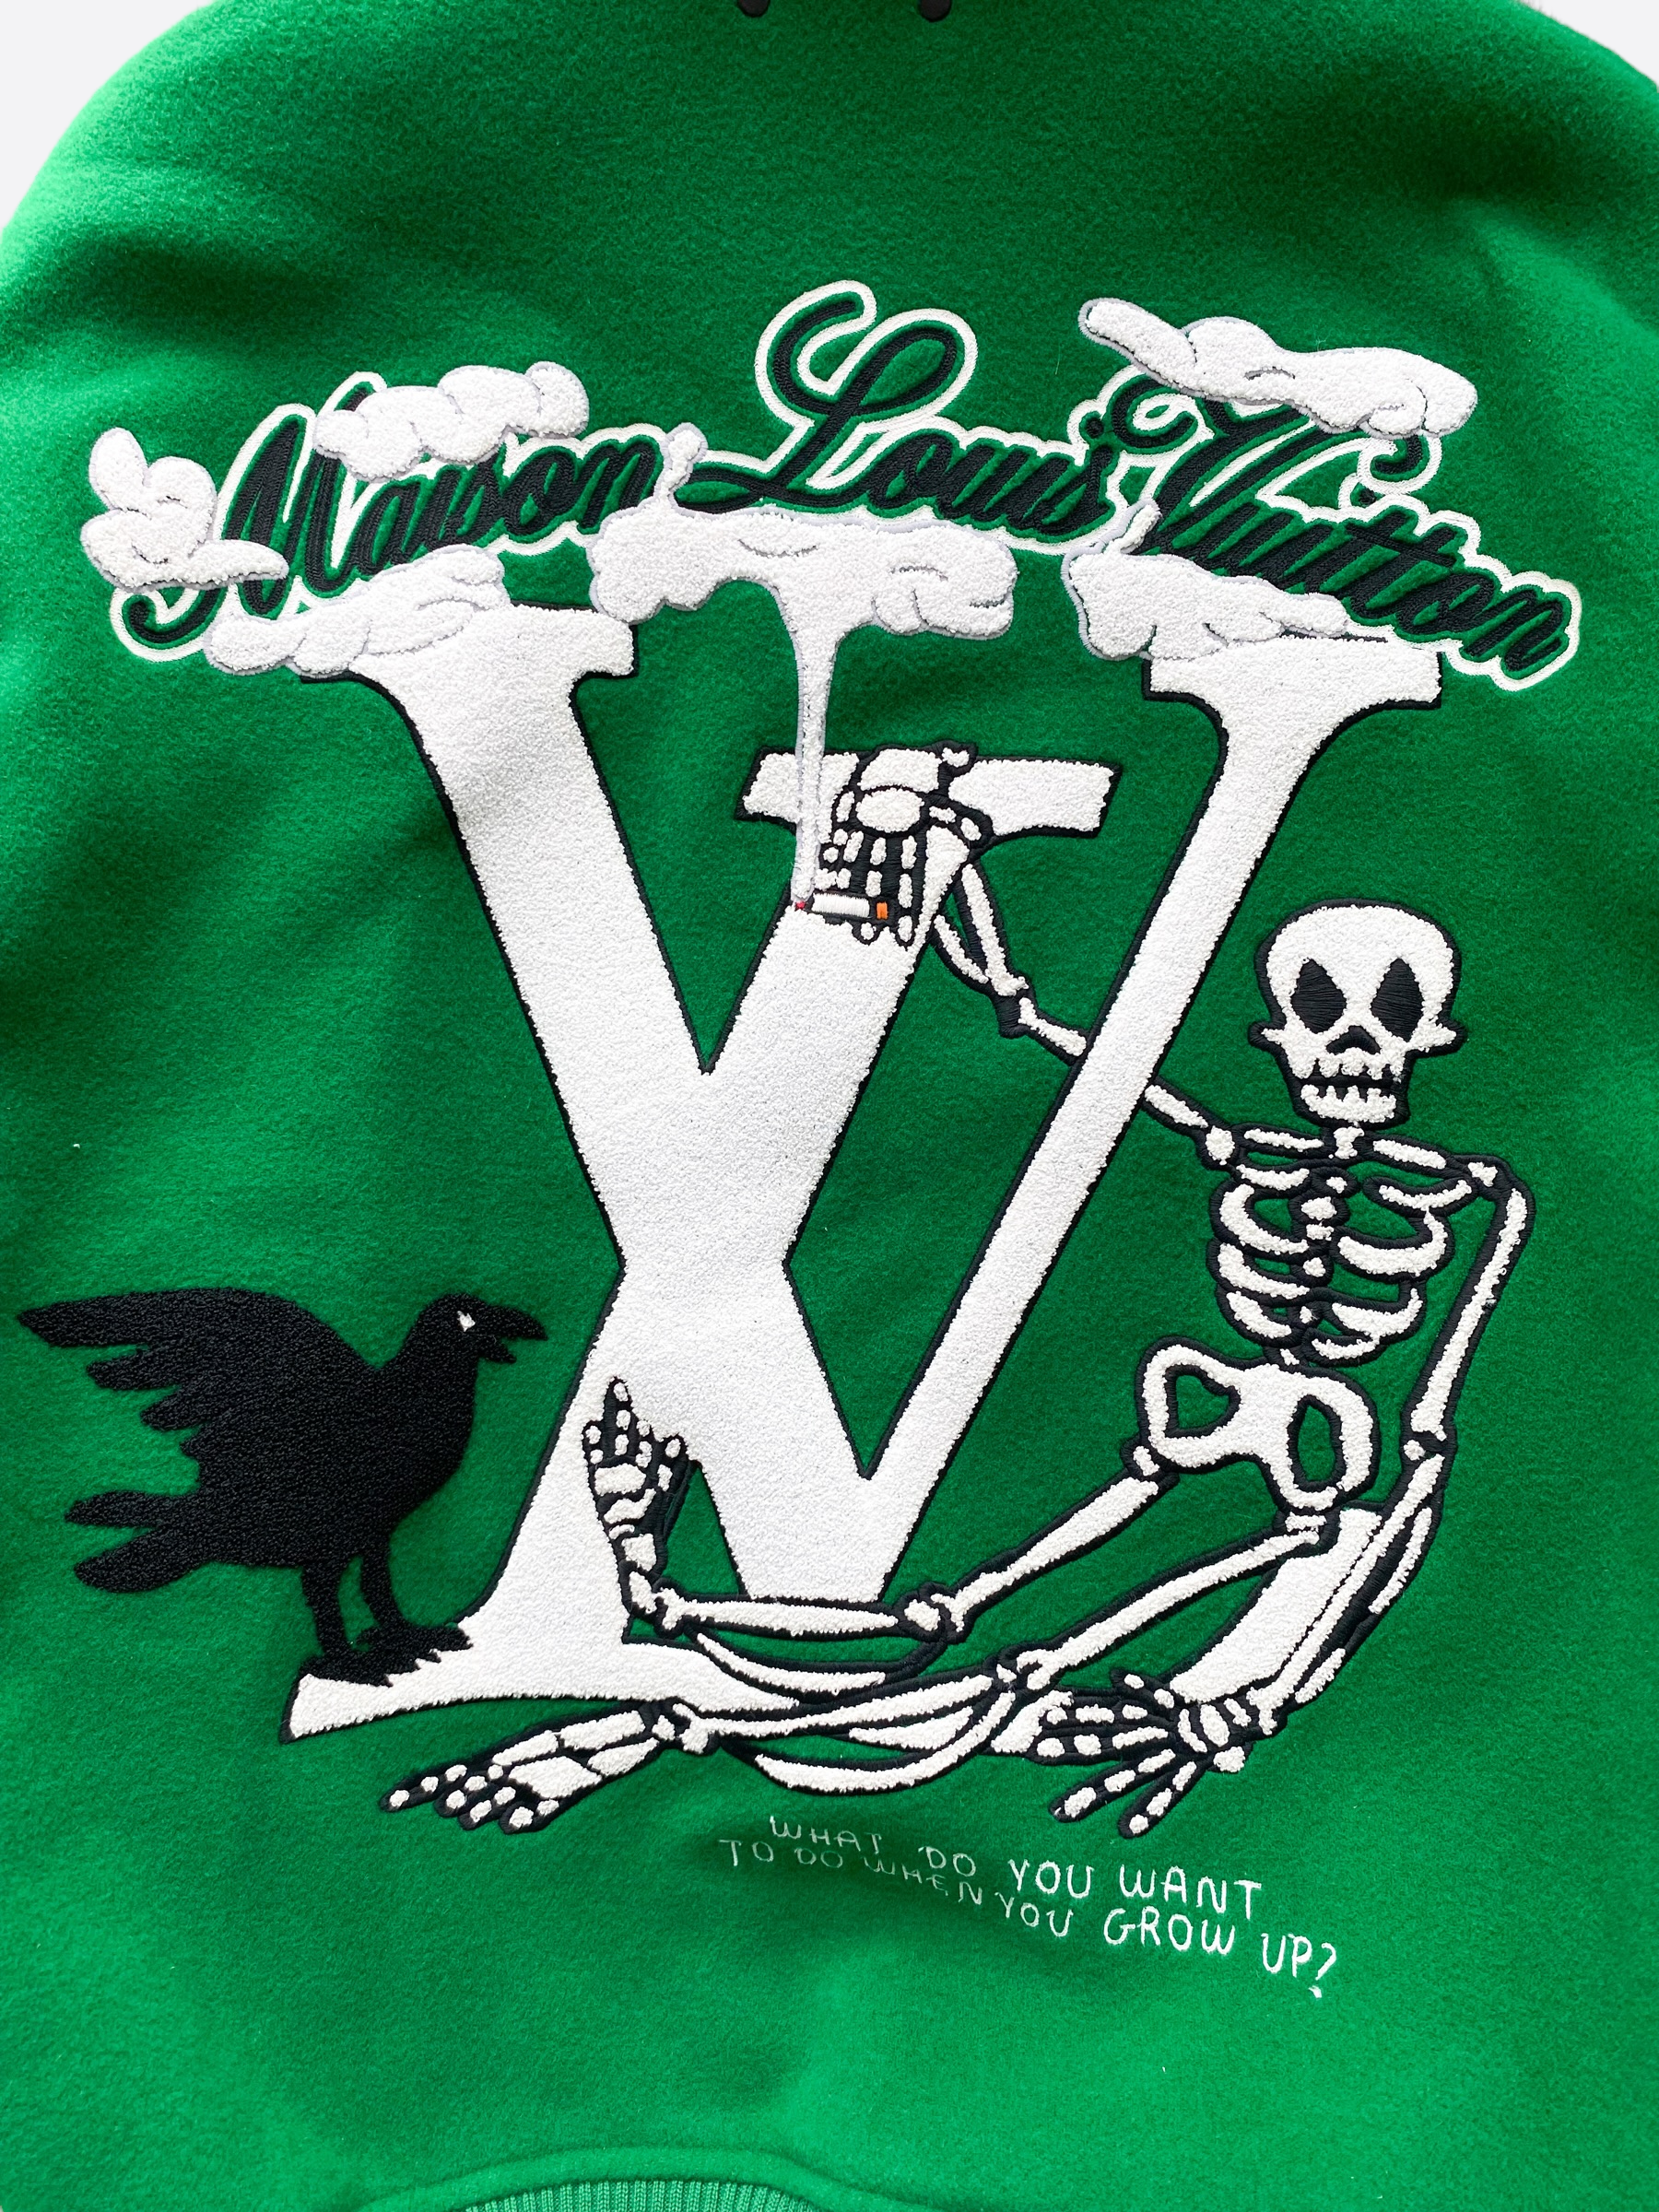 Thegenuineleather Mens Louis Vuitton Green Varsity Jacket 